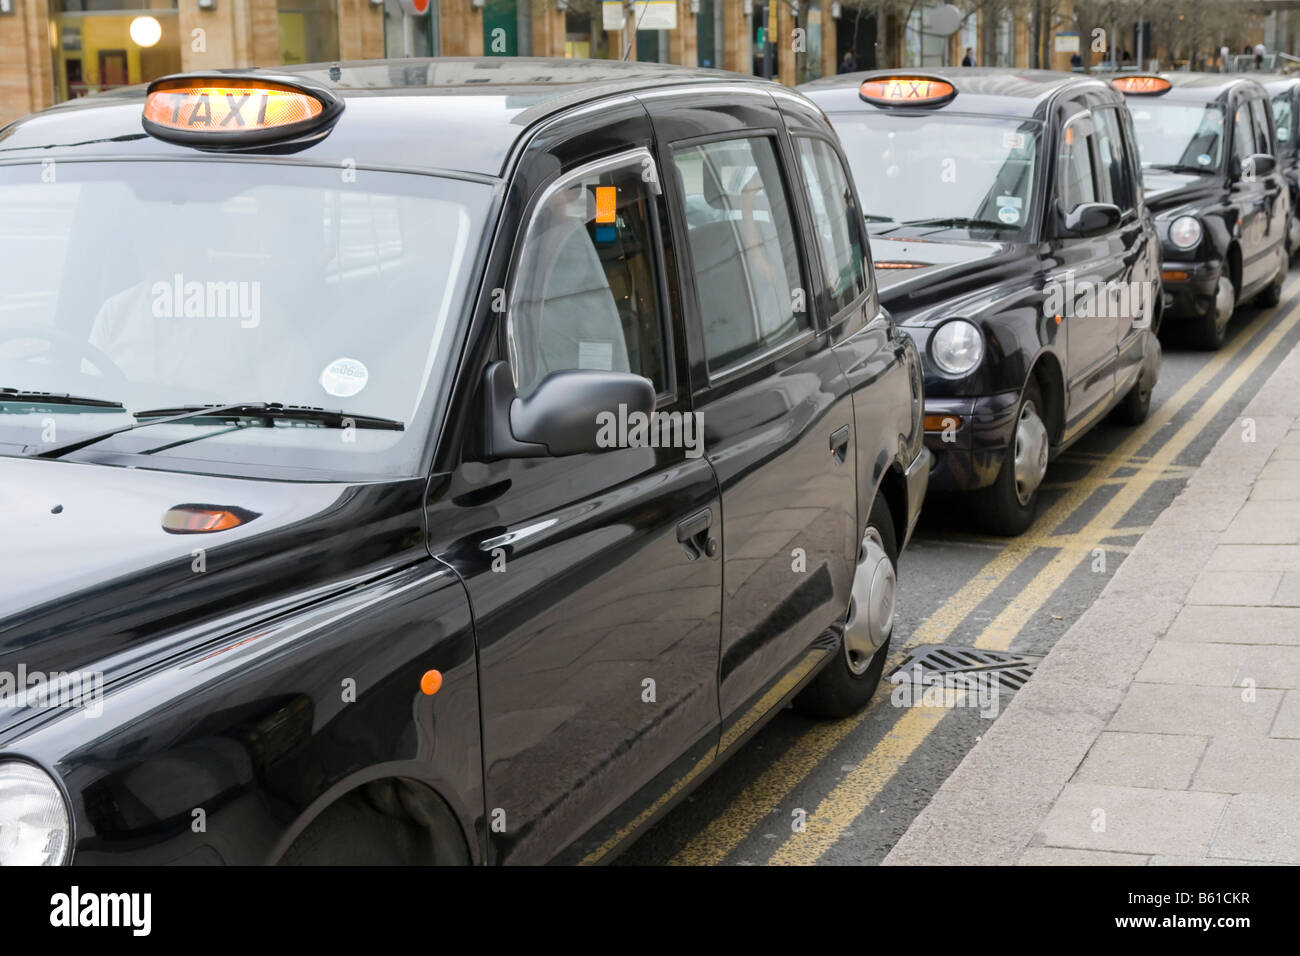 Taxi rank, London, UK Stock Photo